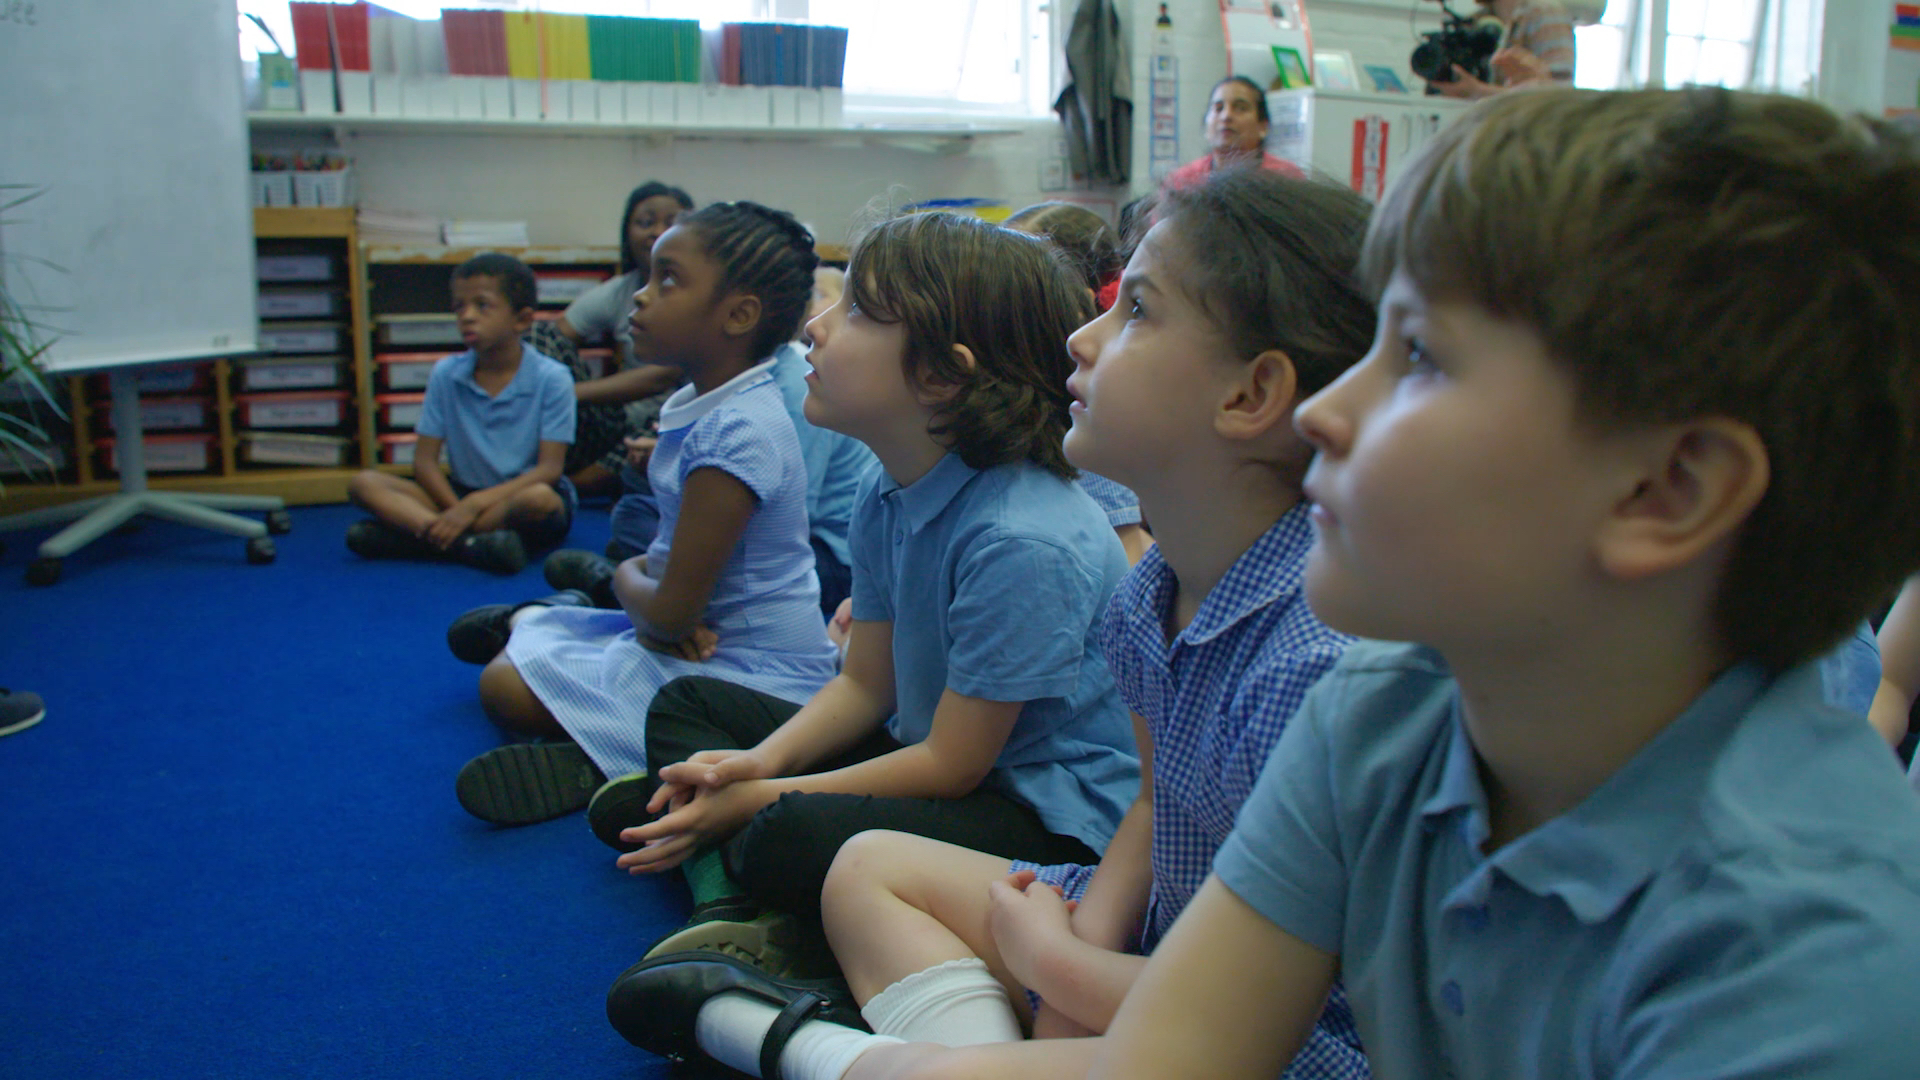 Primary school pupils sitting on the floor